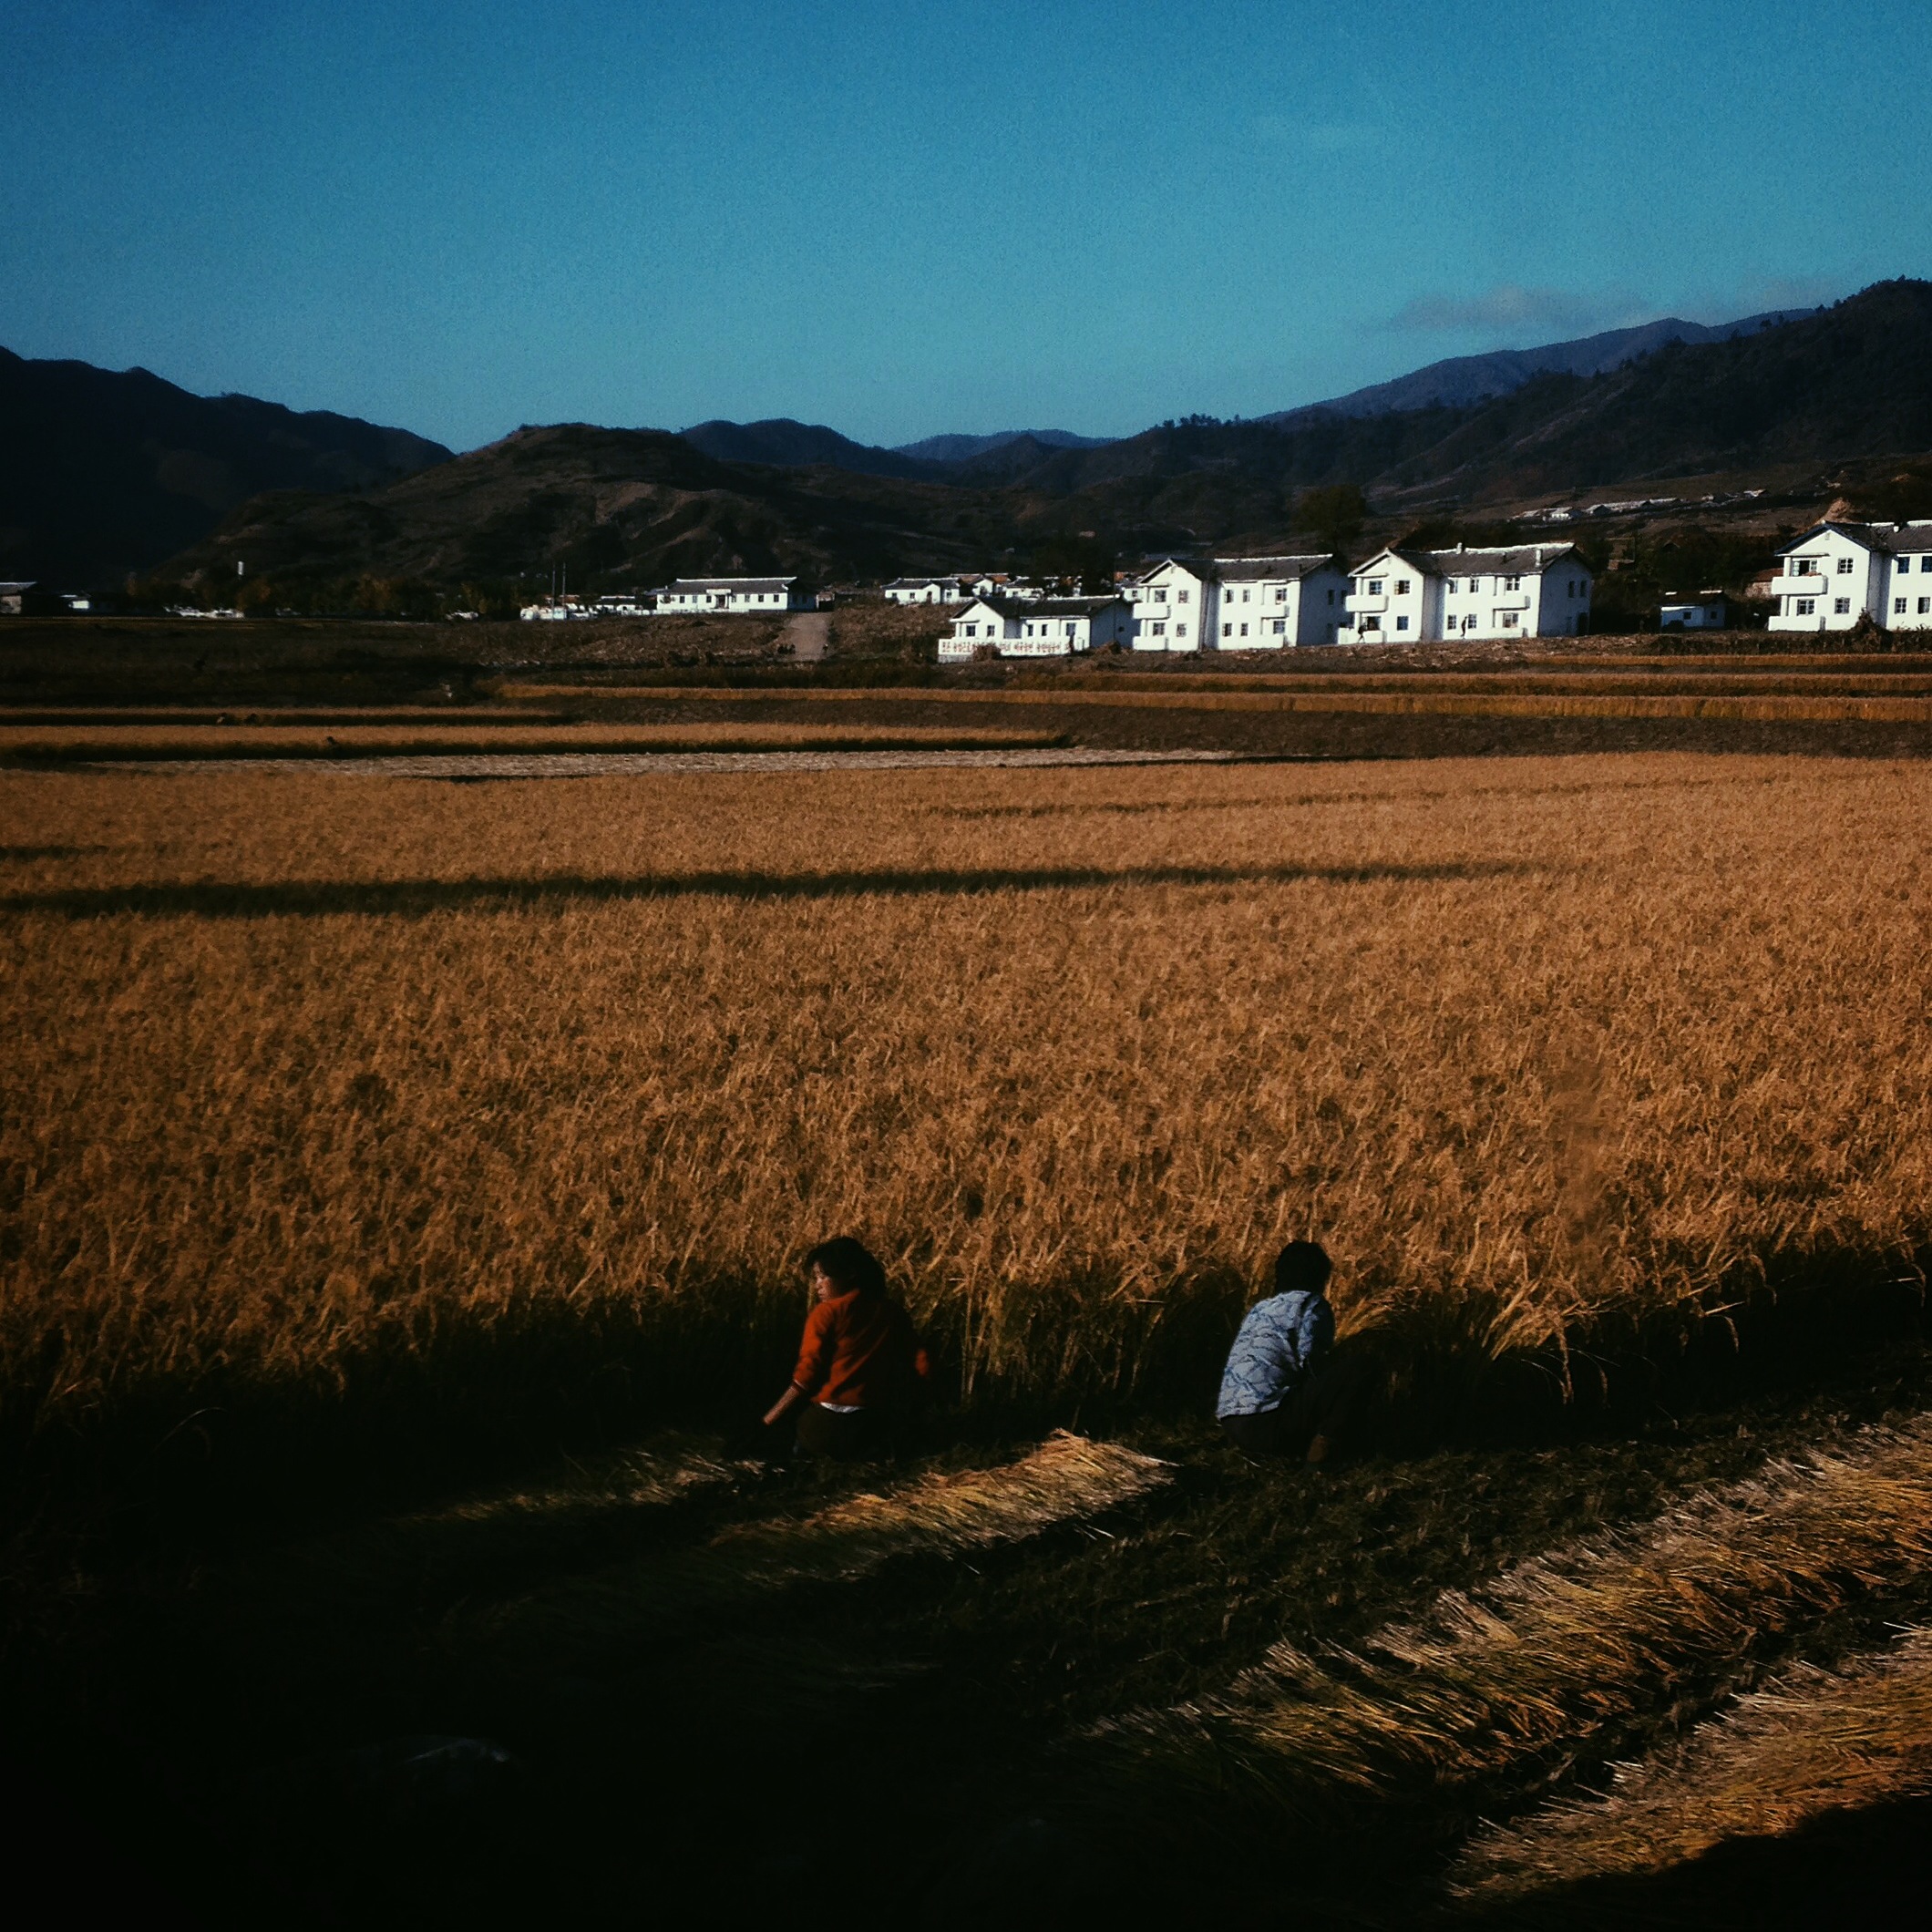 Harvest time outside a village near North Korea's Mt. Kumgang.